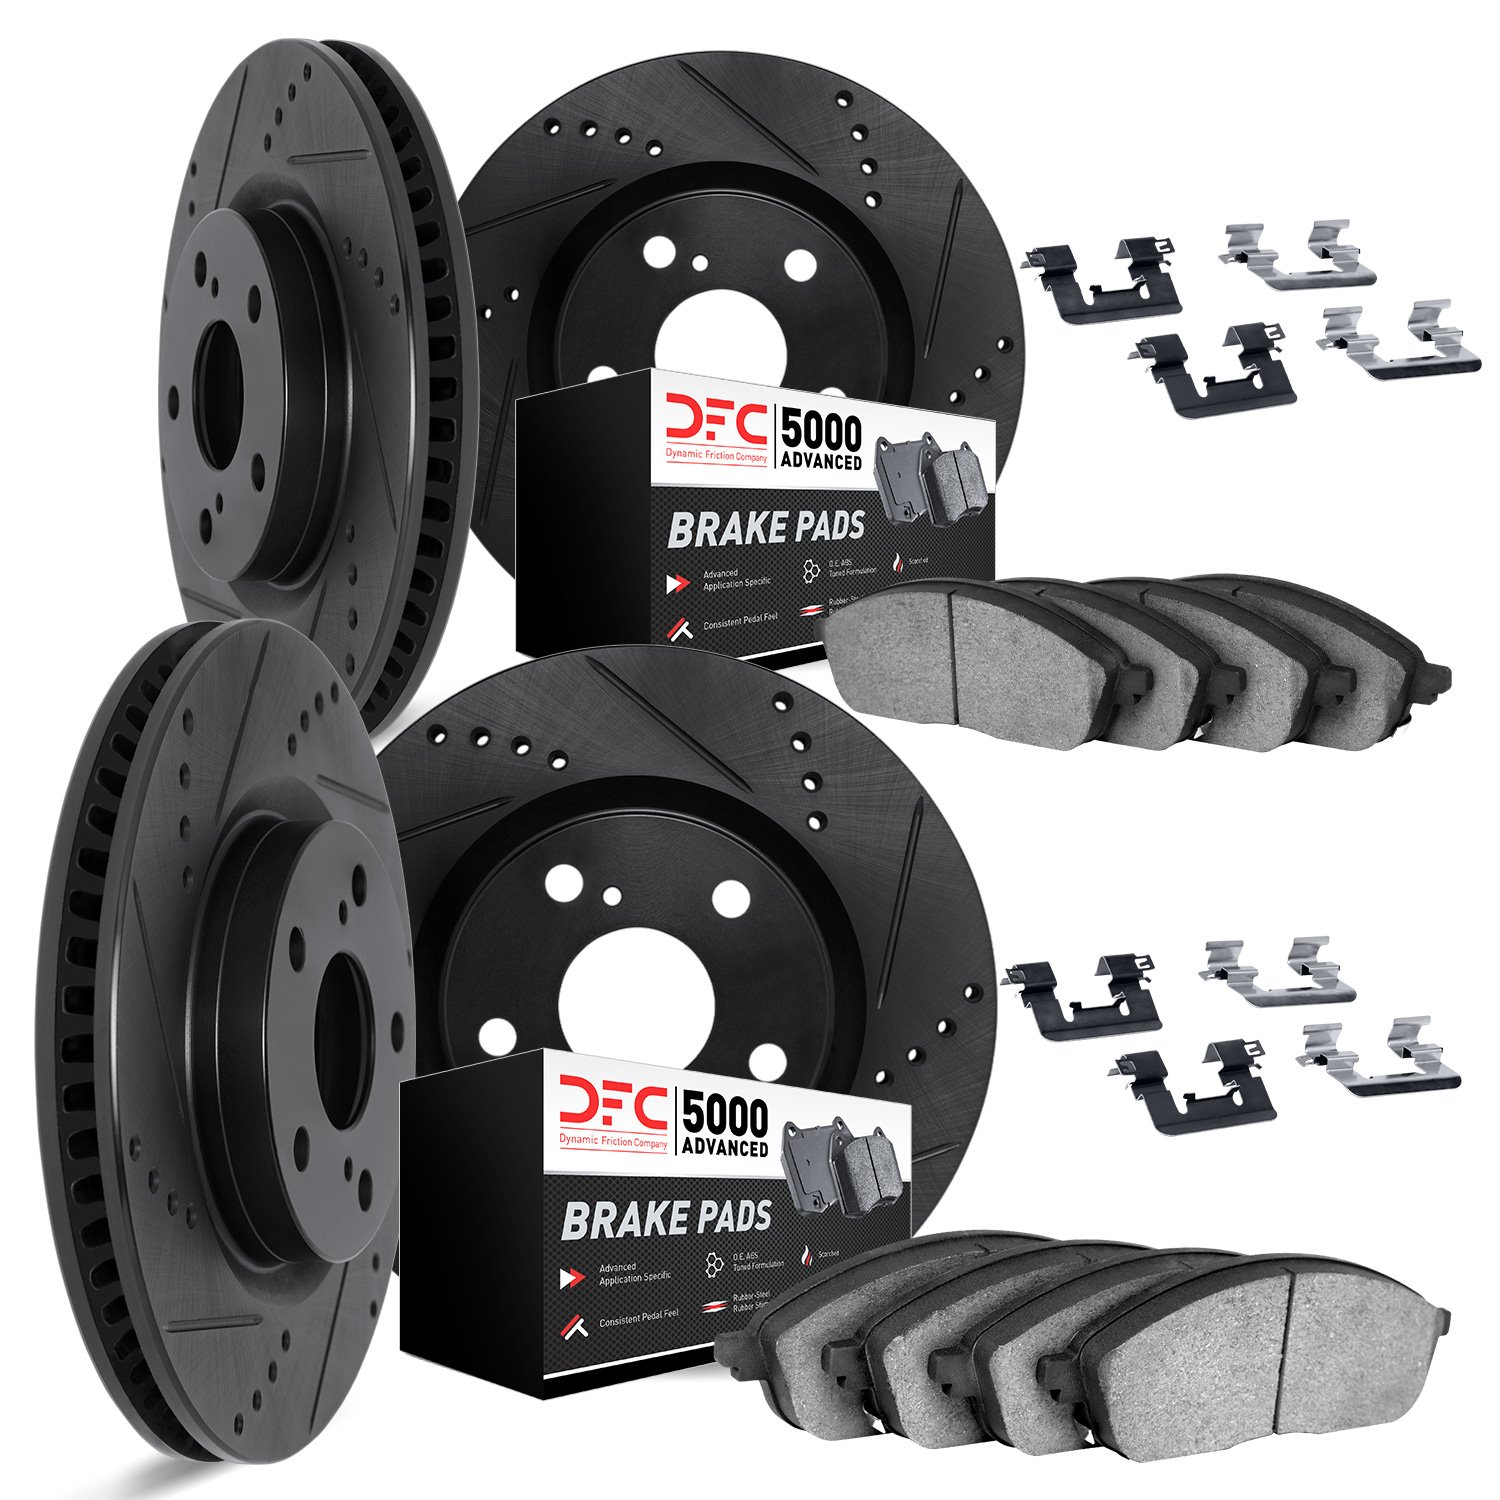 8514-68003 Drilled/Slotted Brake Rotors w/5000 Advanced Brake Pads Kit & Hardware [Black], 2008-2020 Infiniti/Nissan, Position: